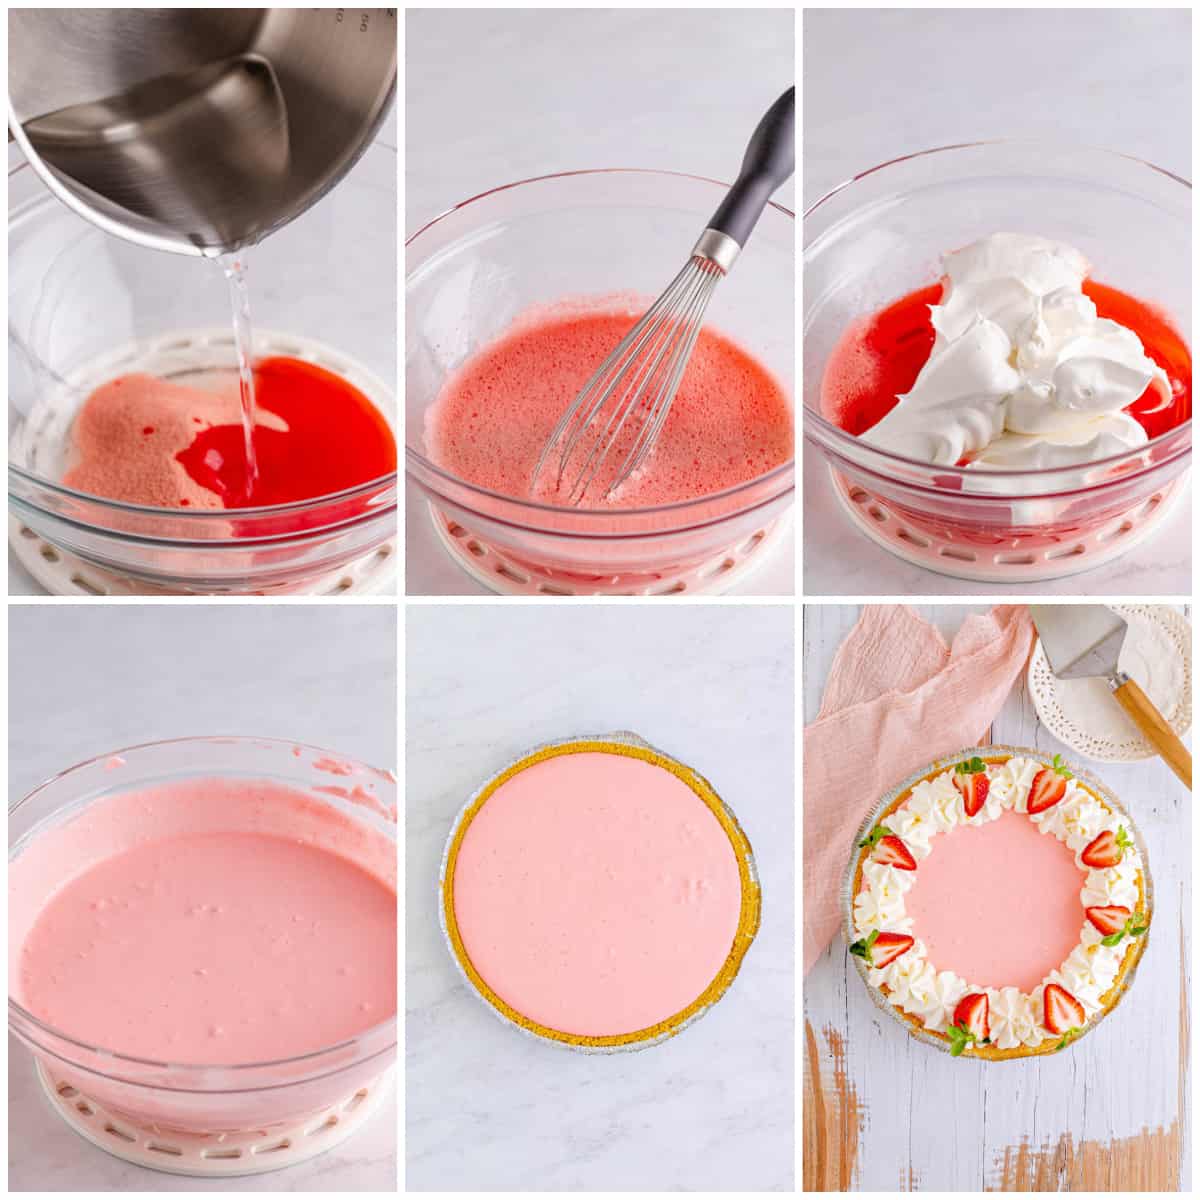 Step by step photos on how to make a Strawberry Jello Pie.